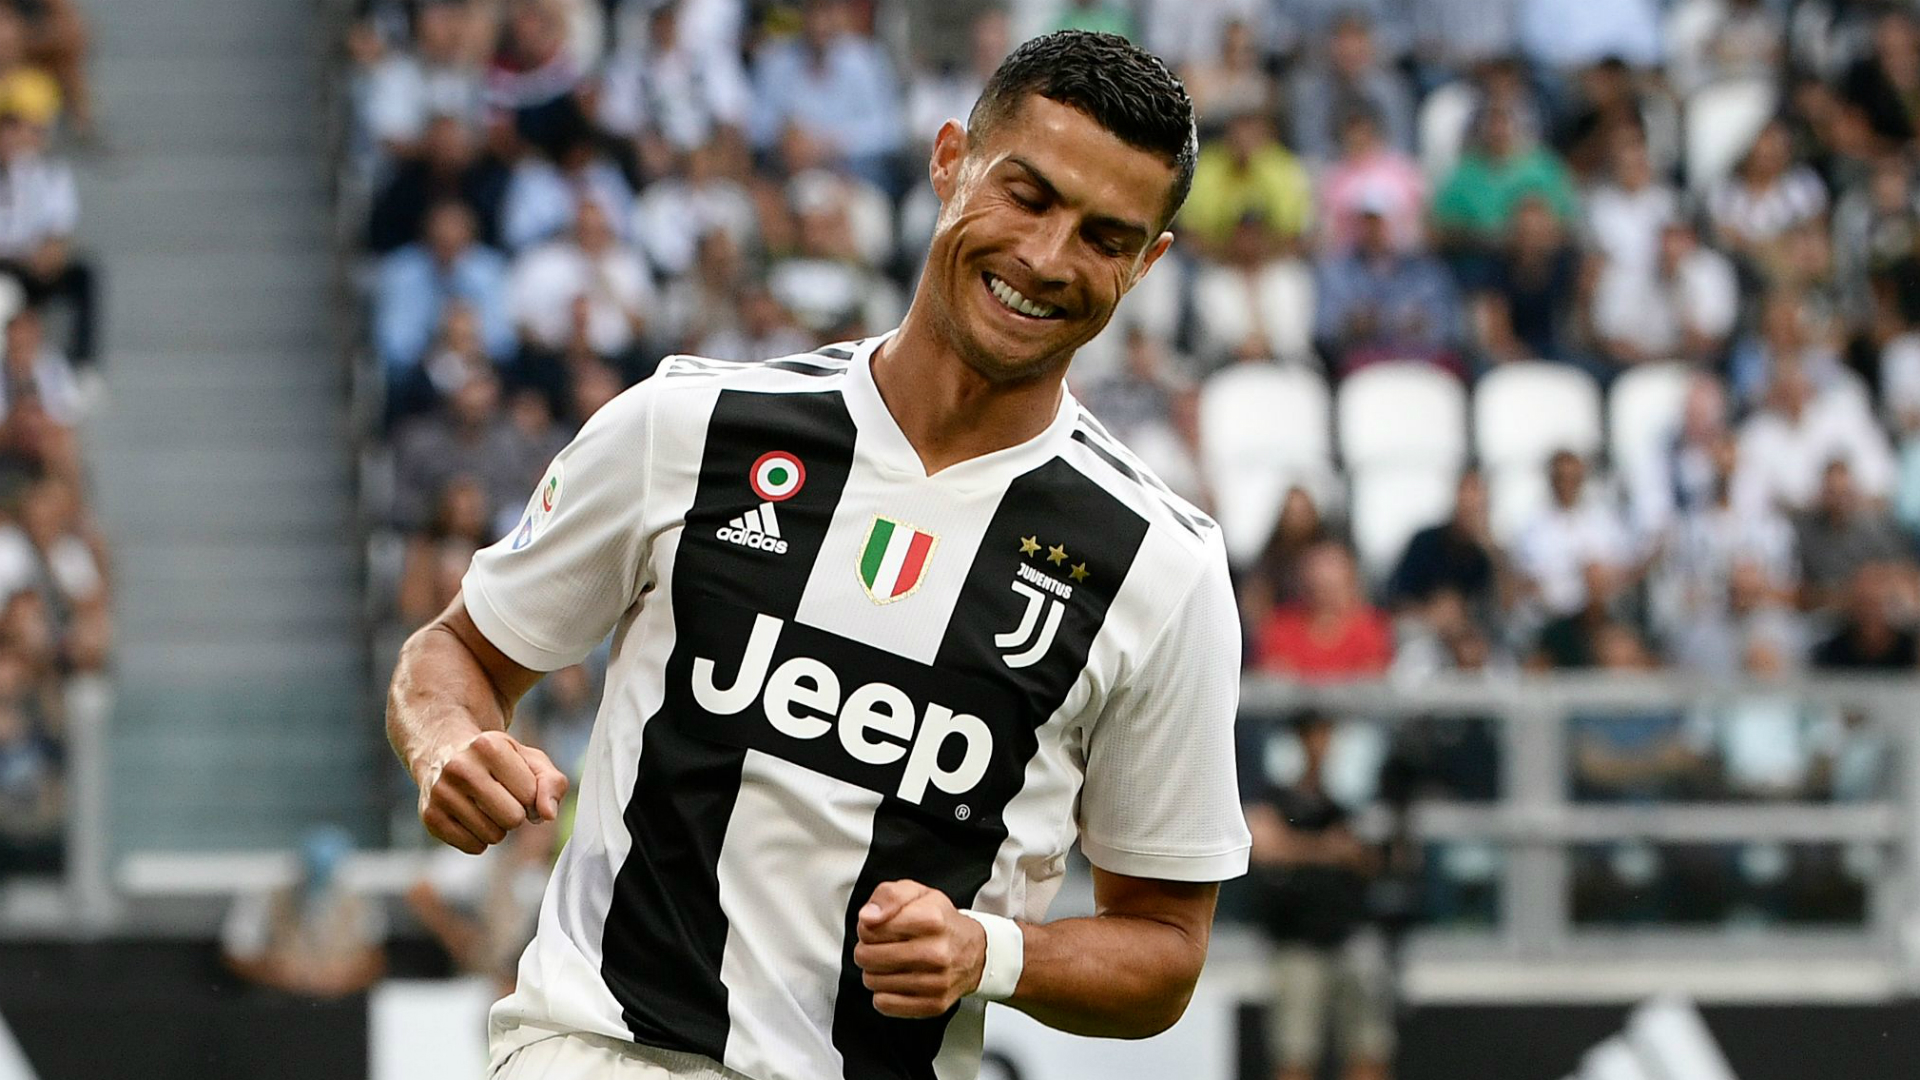 23 shots, 0 goals - The unflattering stats behind Ronaldo's Juventus